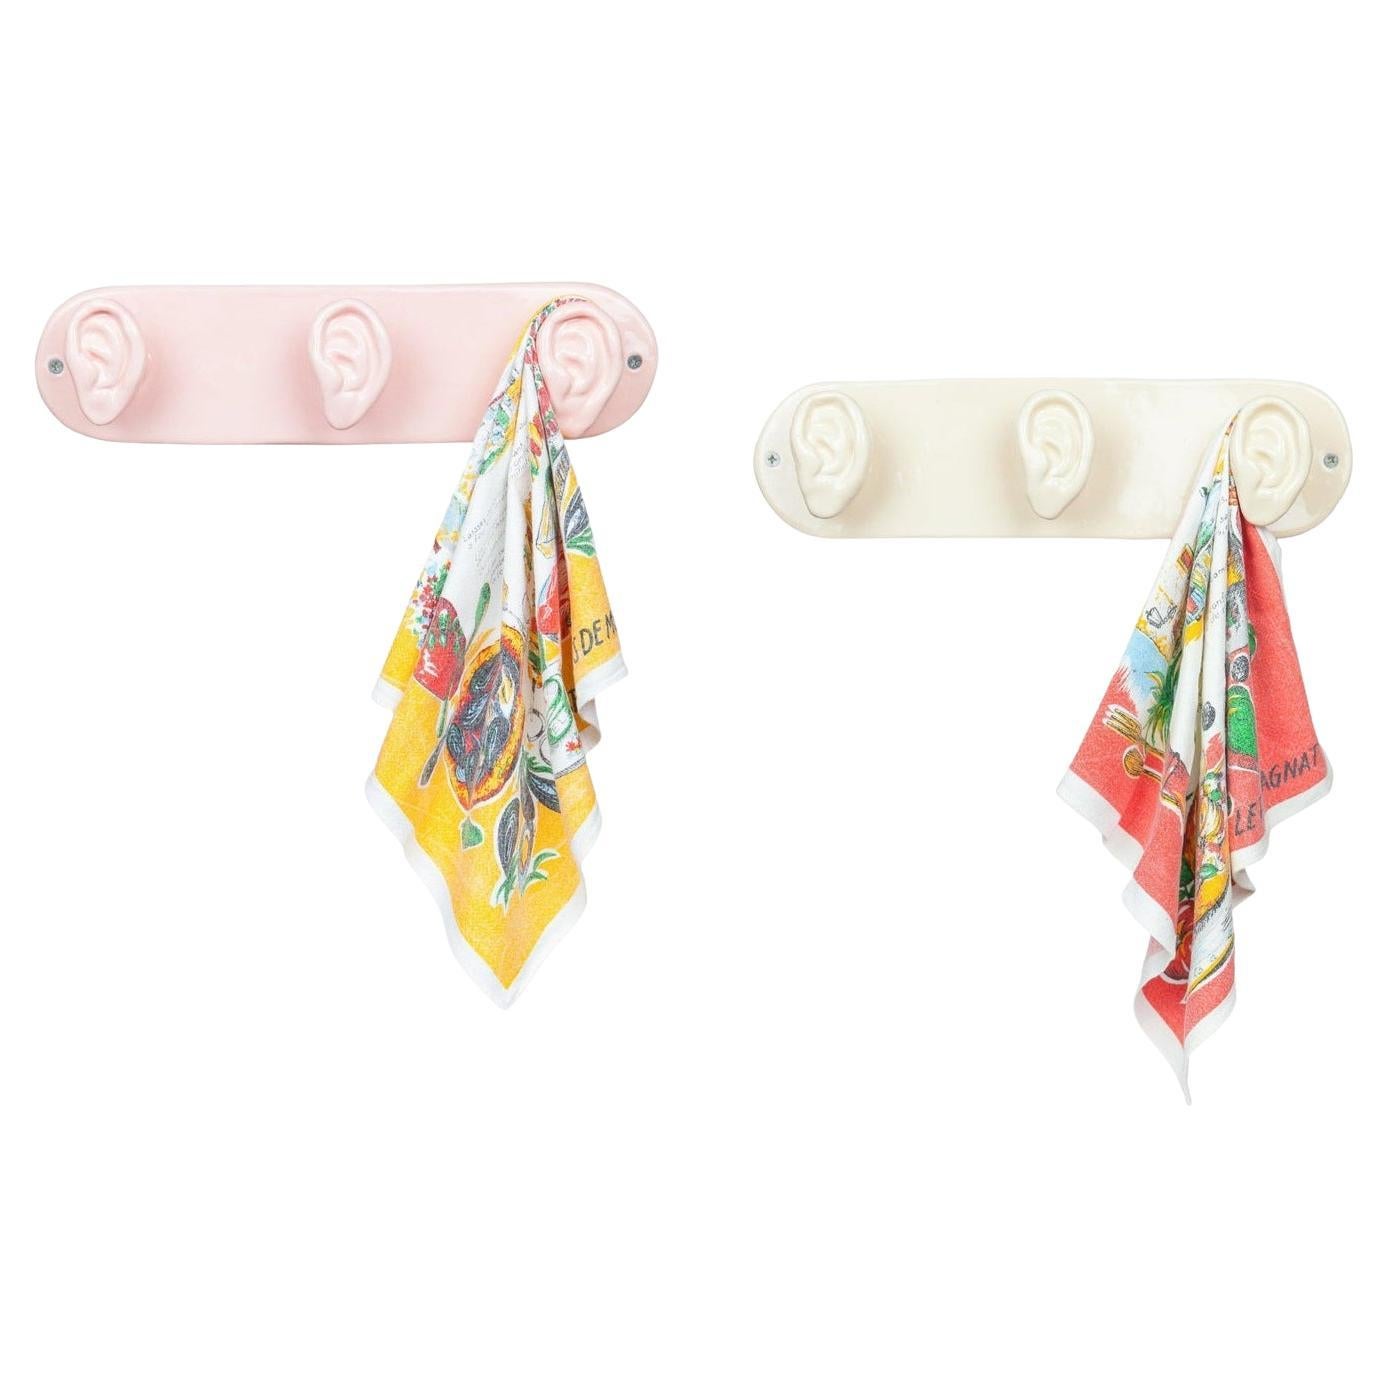 Pair of Hanging 3 Ears Pink Towel Hooks by Lola Mayeras